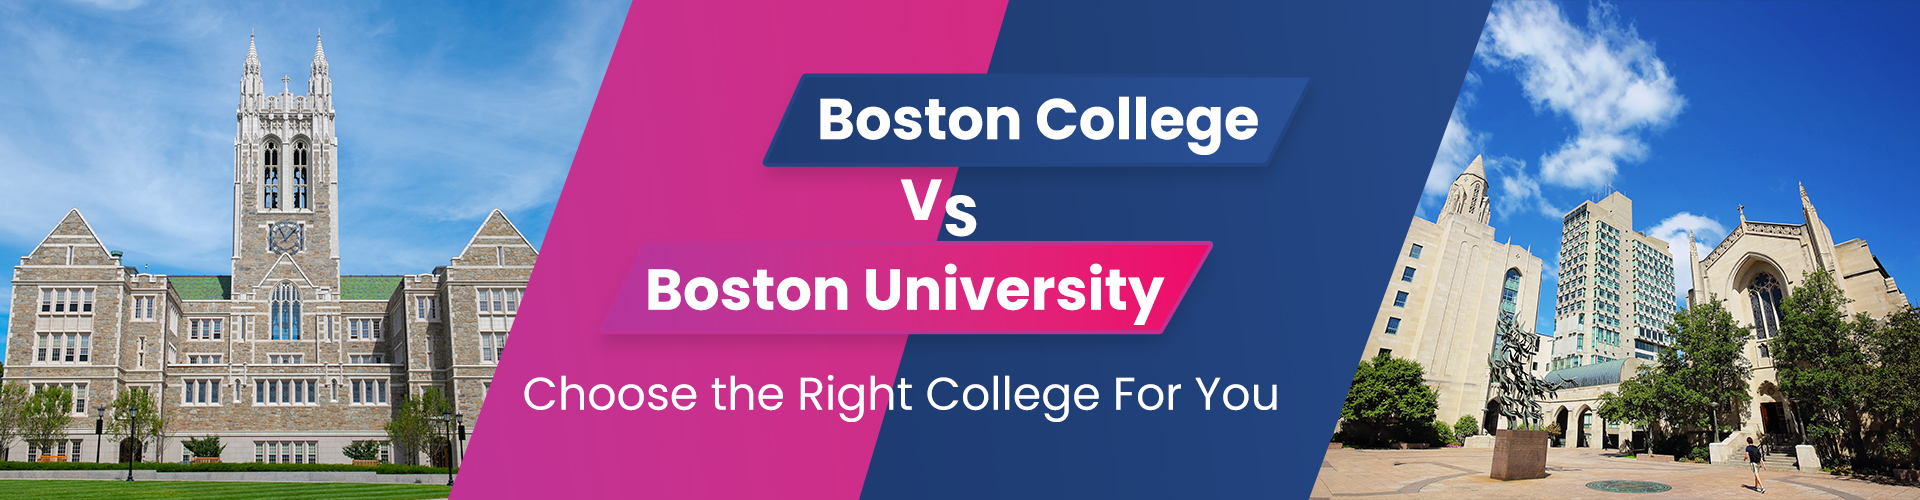 Boston College vs. Boston University